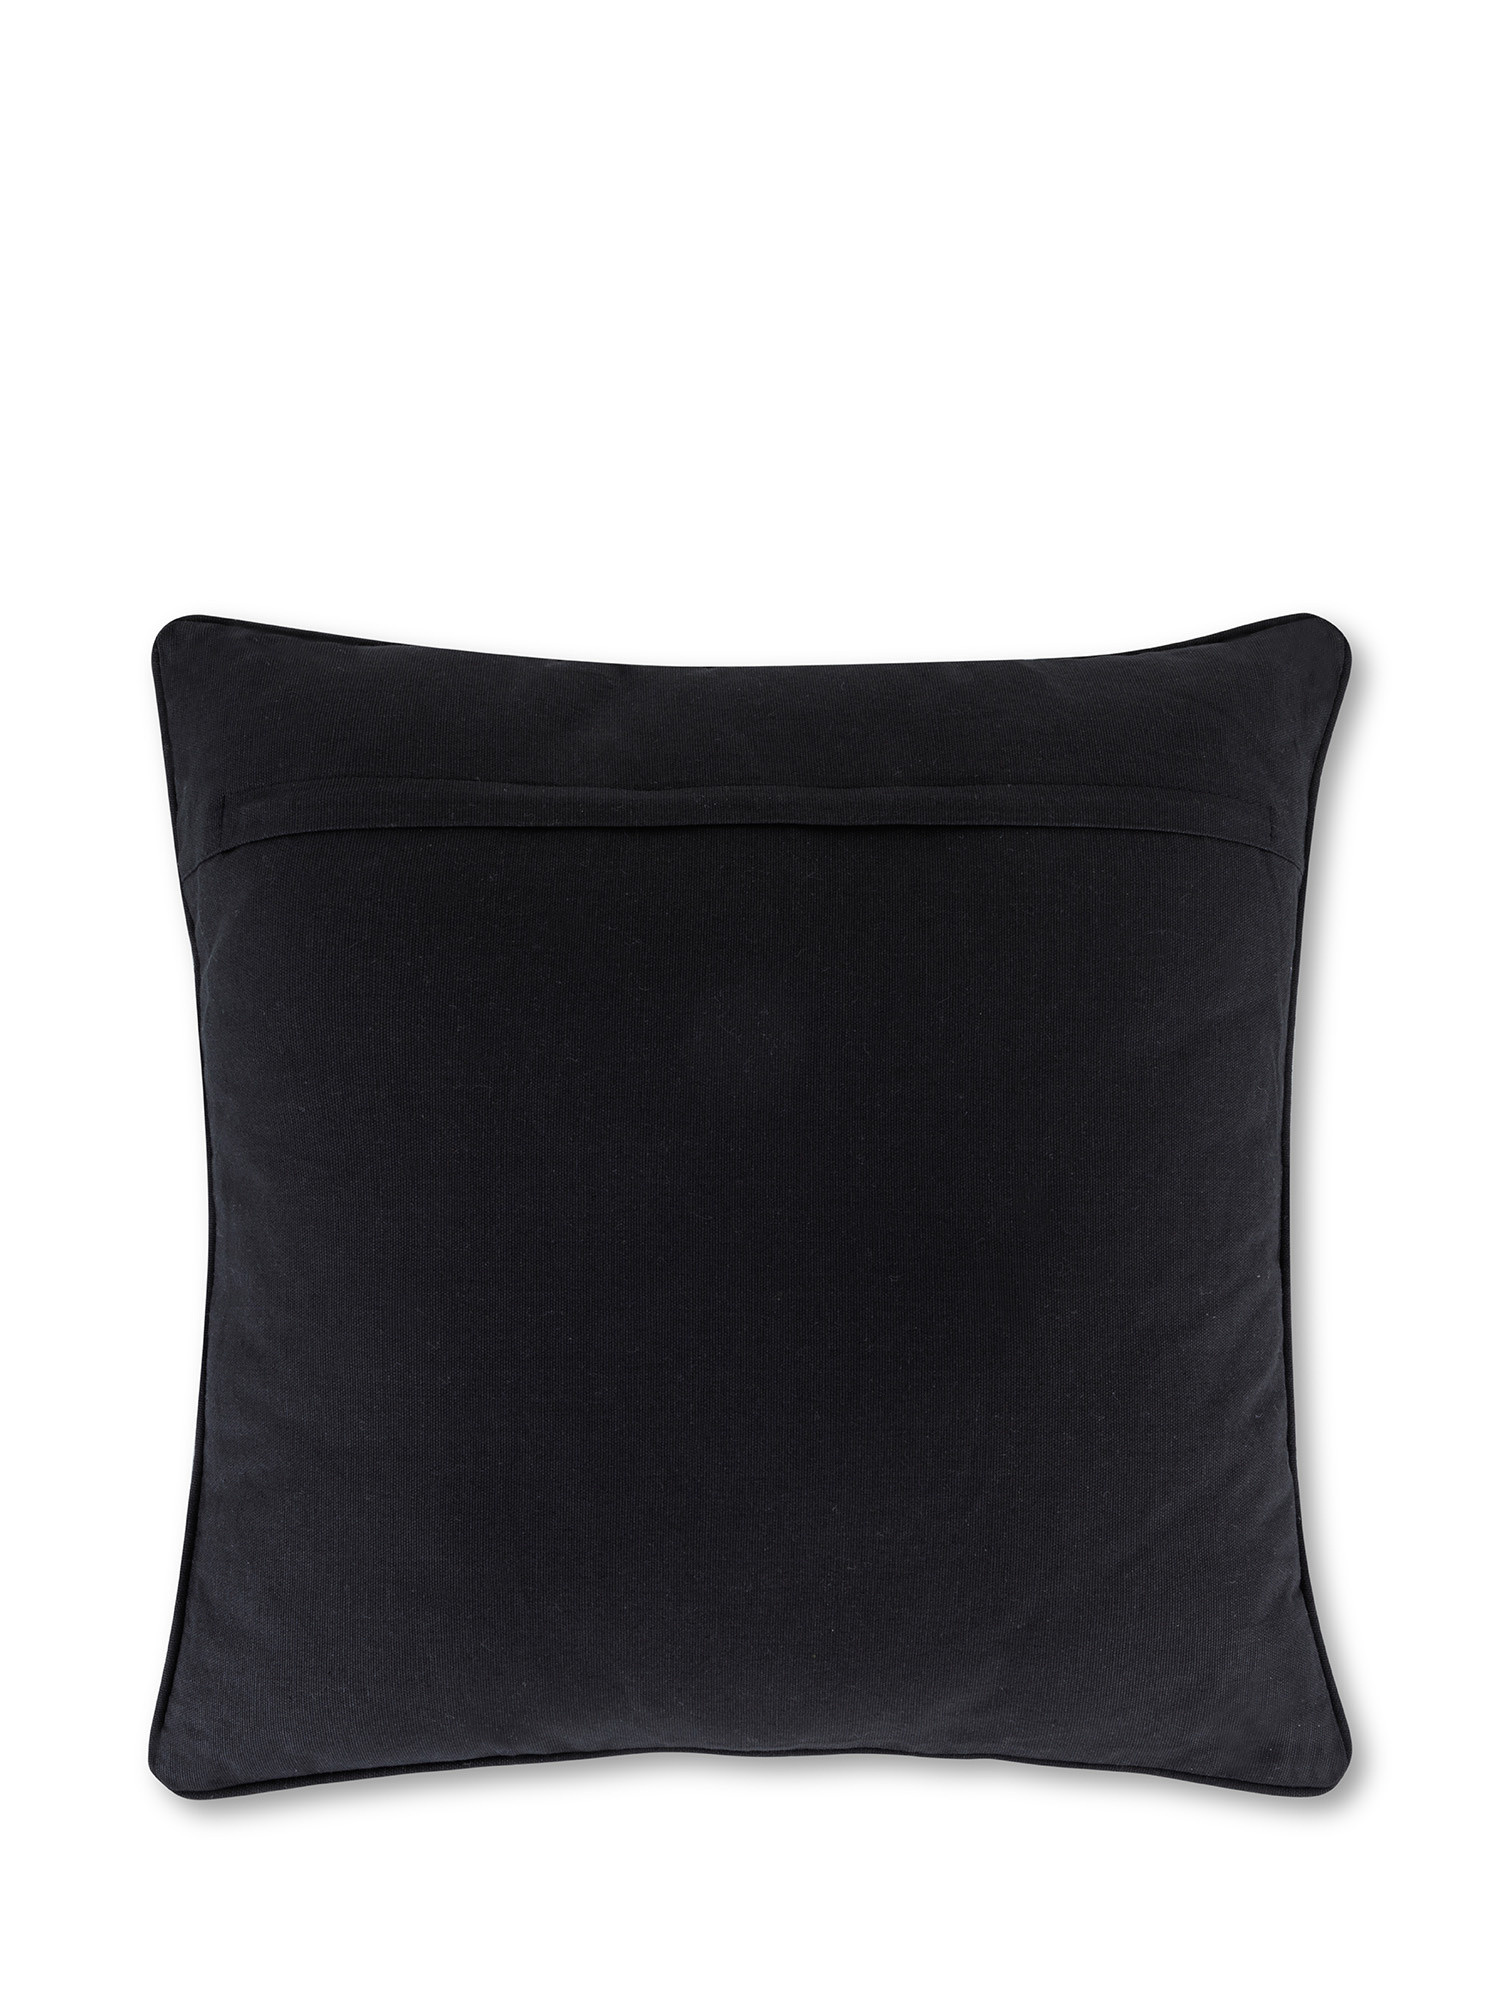 Cotton cushion 45x45cm, Black, large image number 1